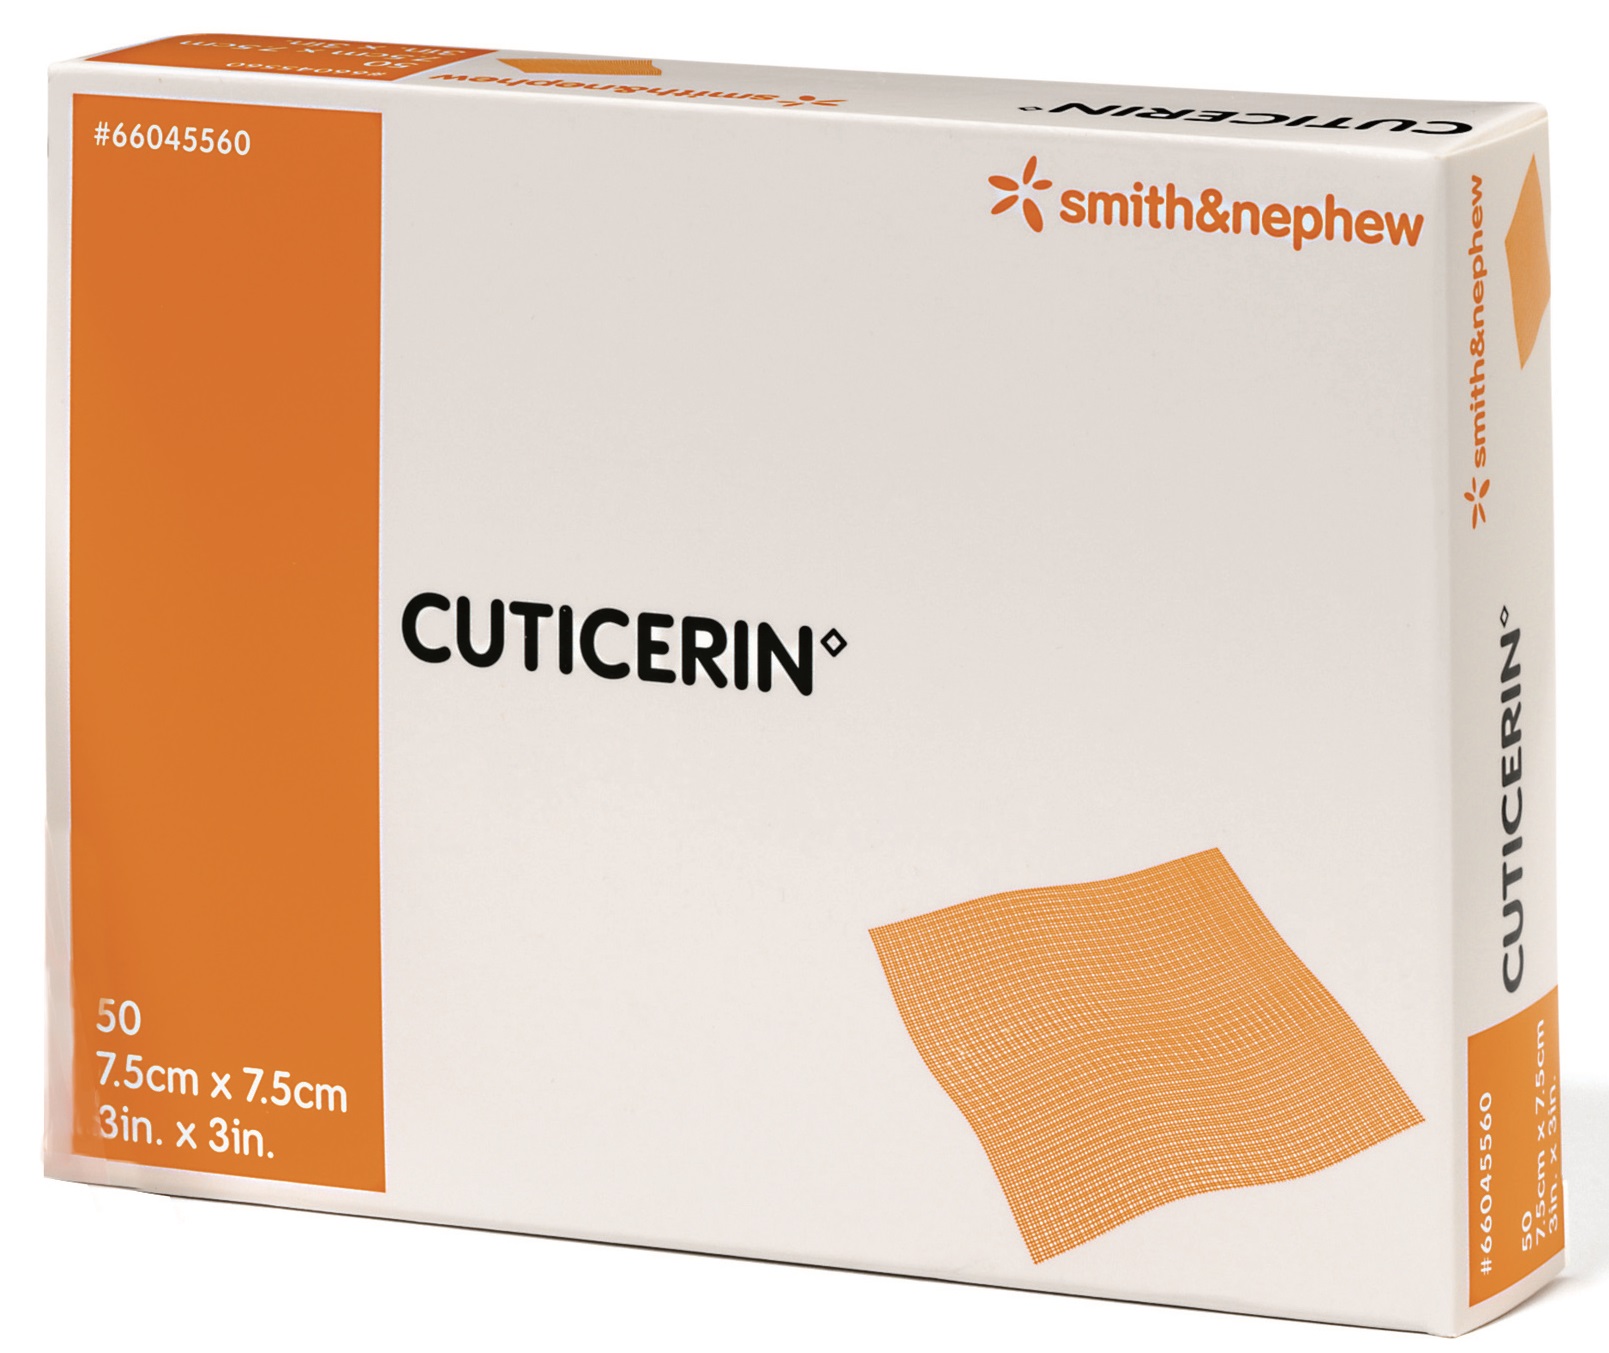 Cuticerin Impregnated Gauze 7.5cm x 7.5cm image 1